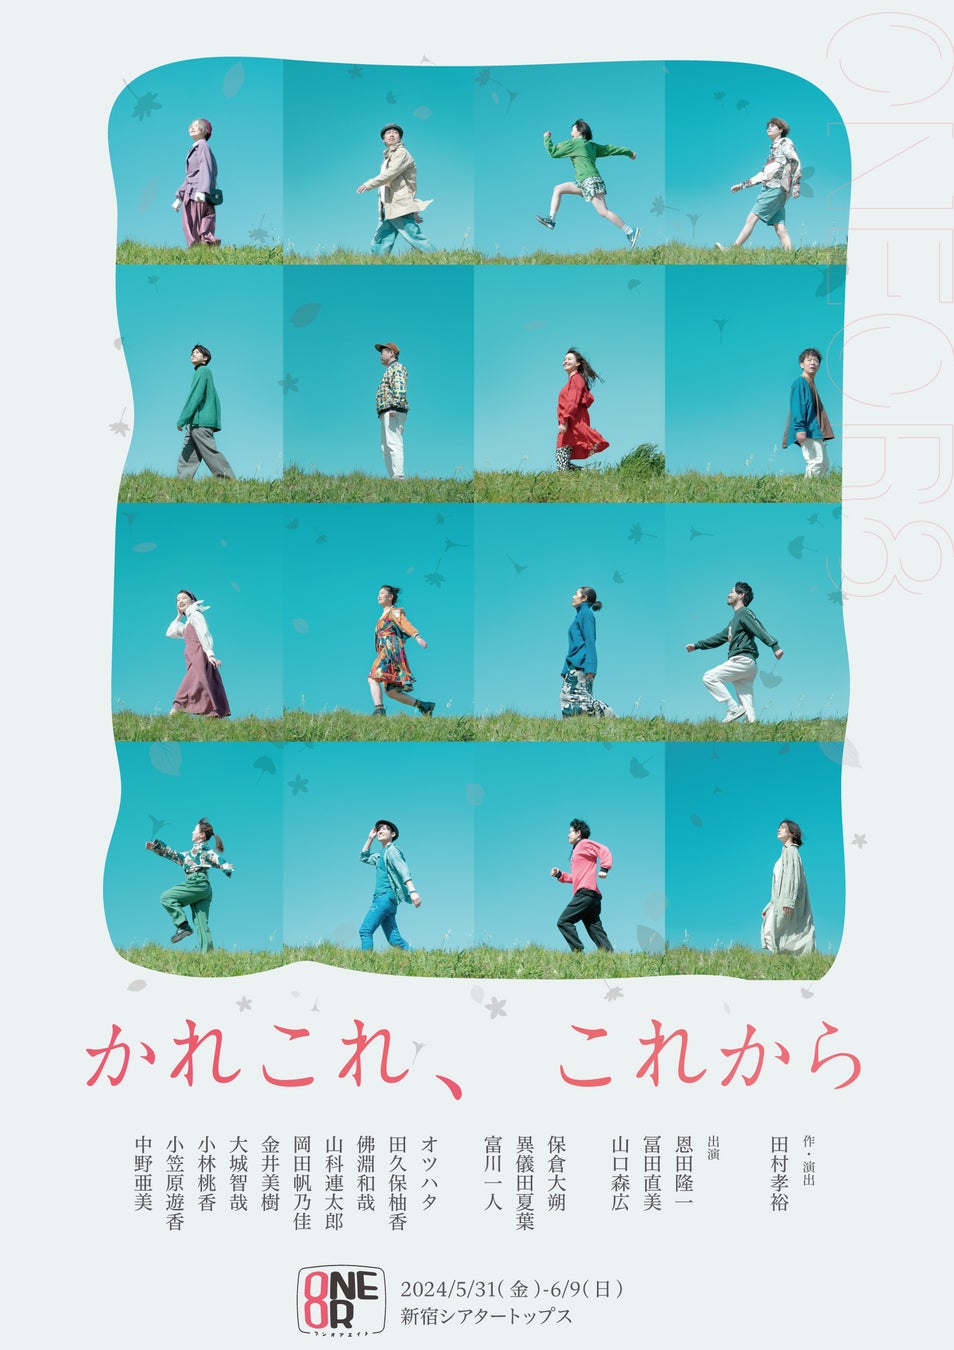 AKB48・行天優莉奈の主演映画『けっこい盆栽』がクランクイン。「盆栽にハマり盆栽士の資格を取得しました」